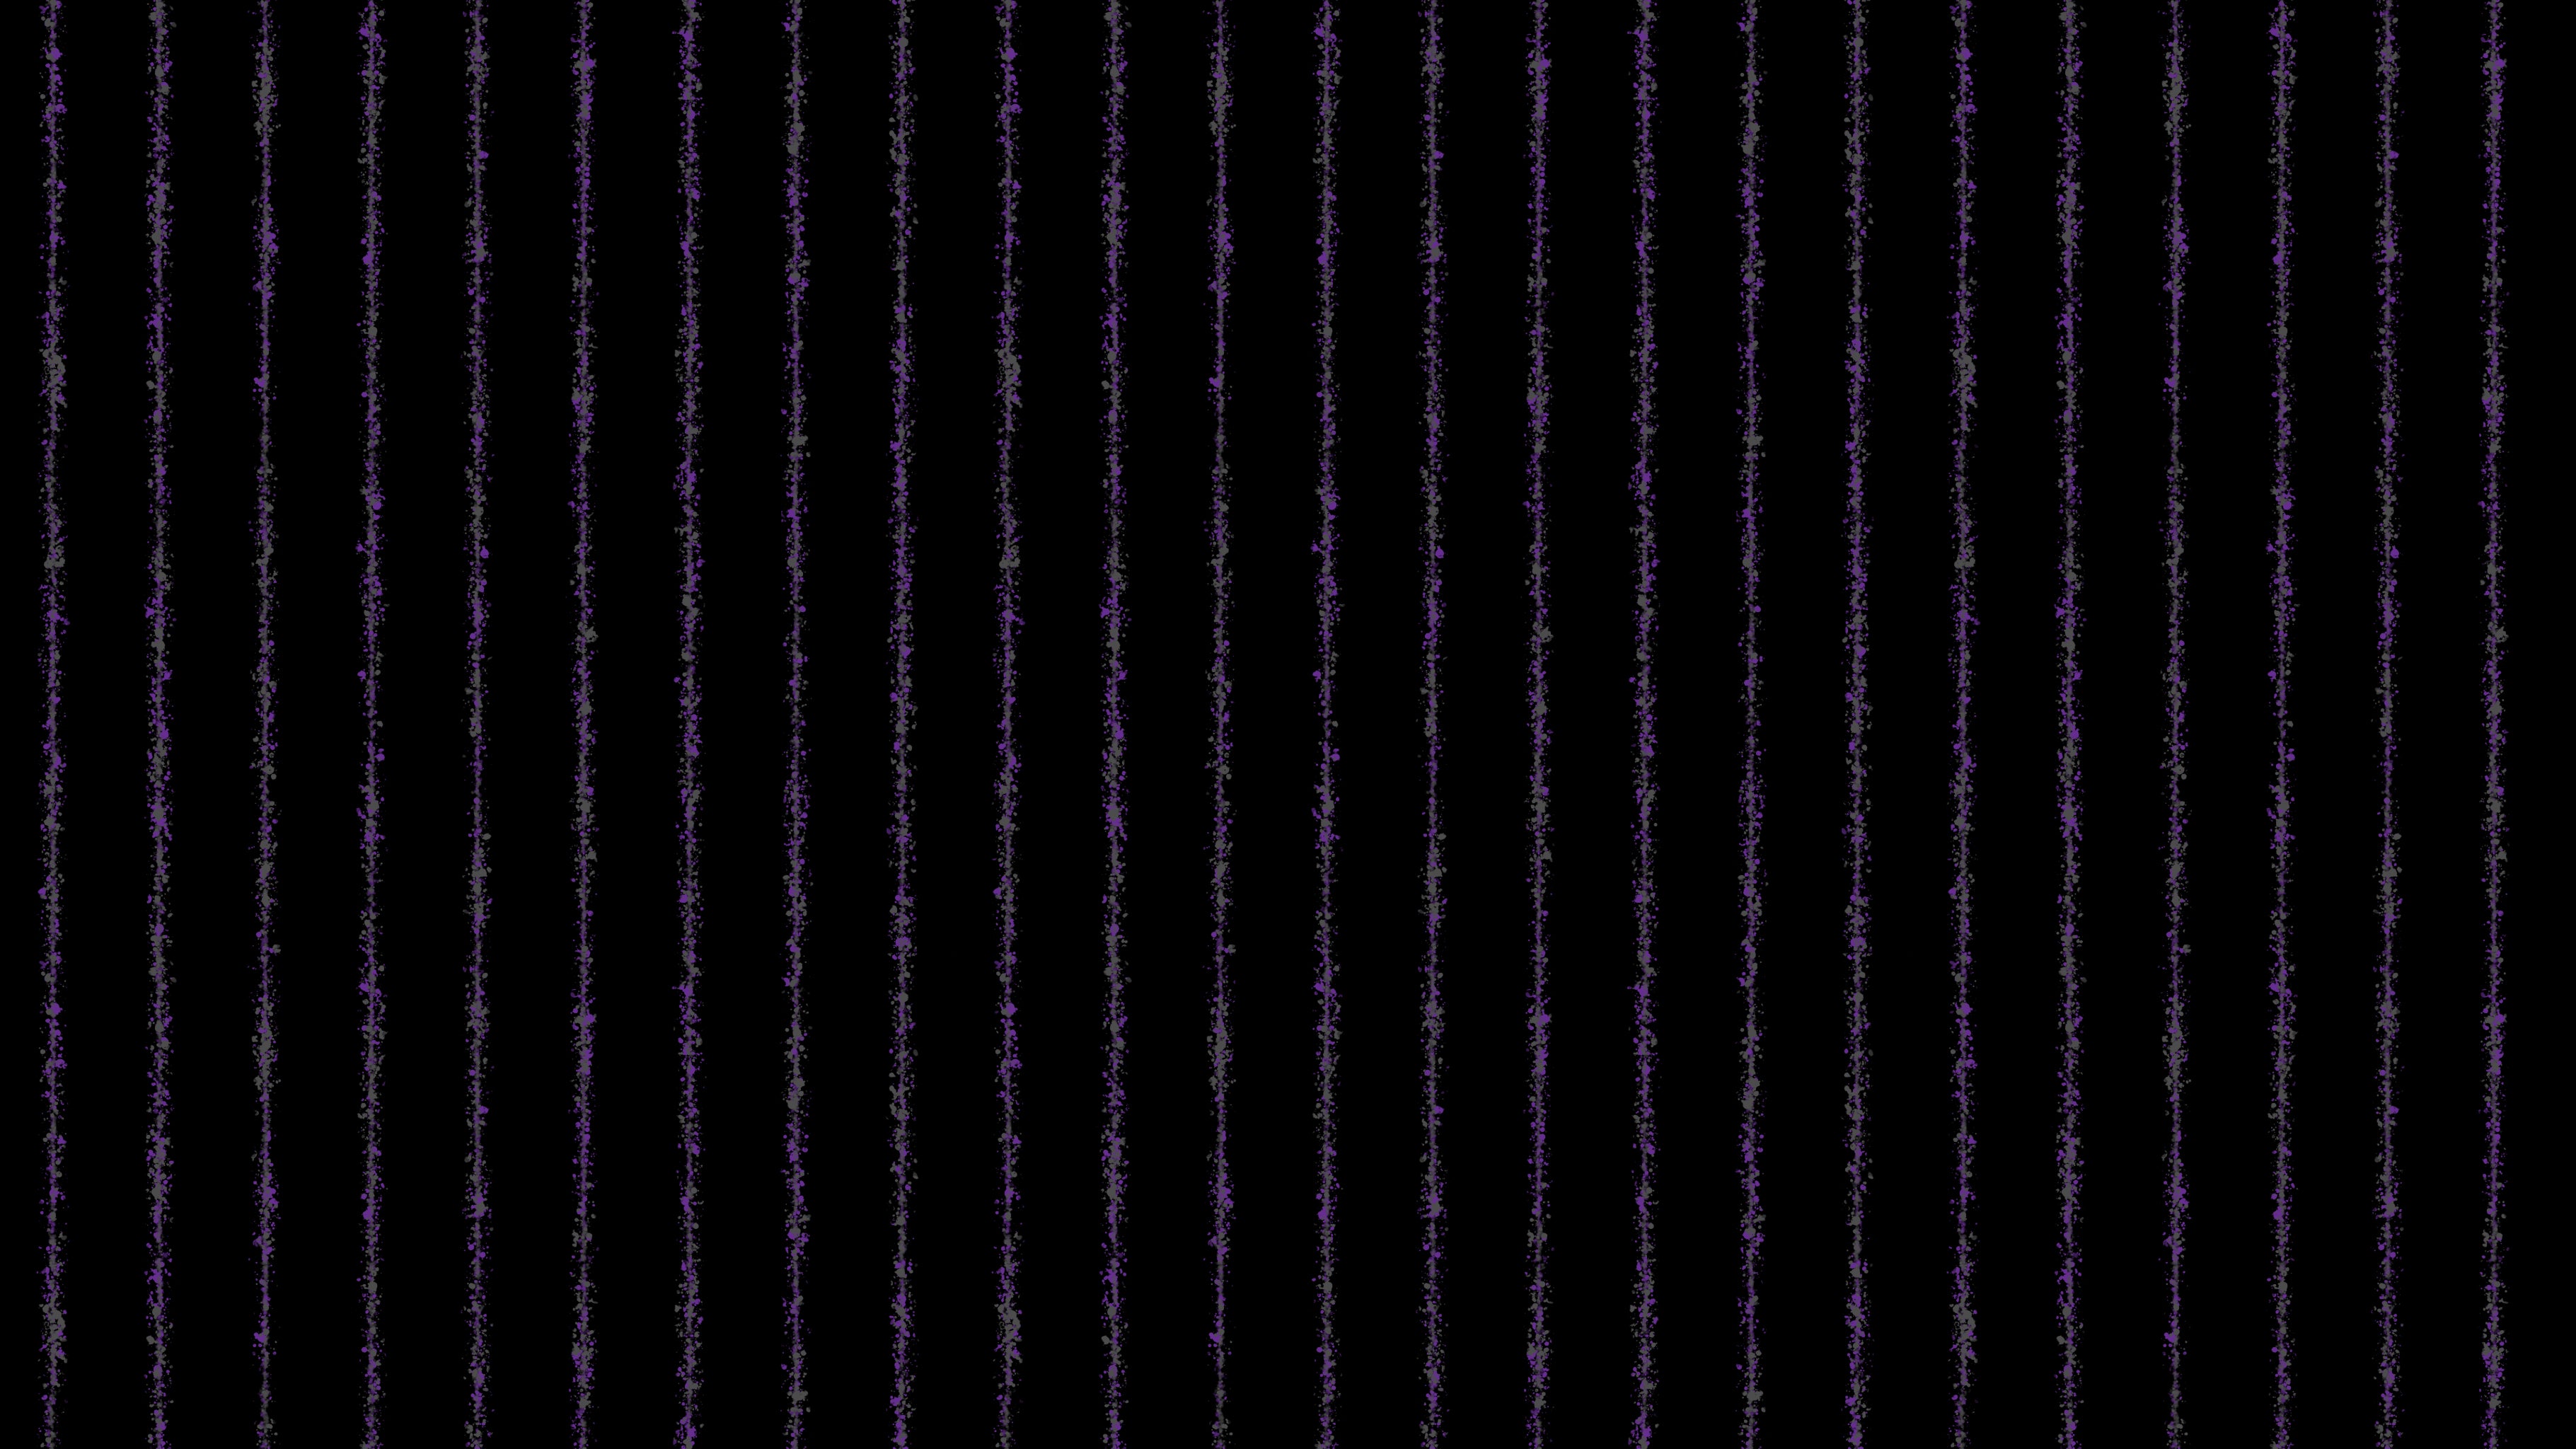 Splatter Pinstripe in grey and purple on black, by Studio Ten Design